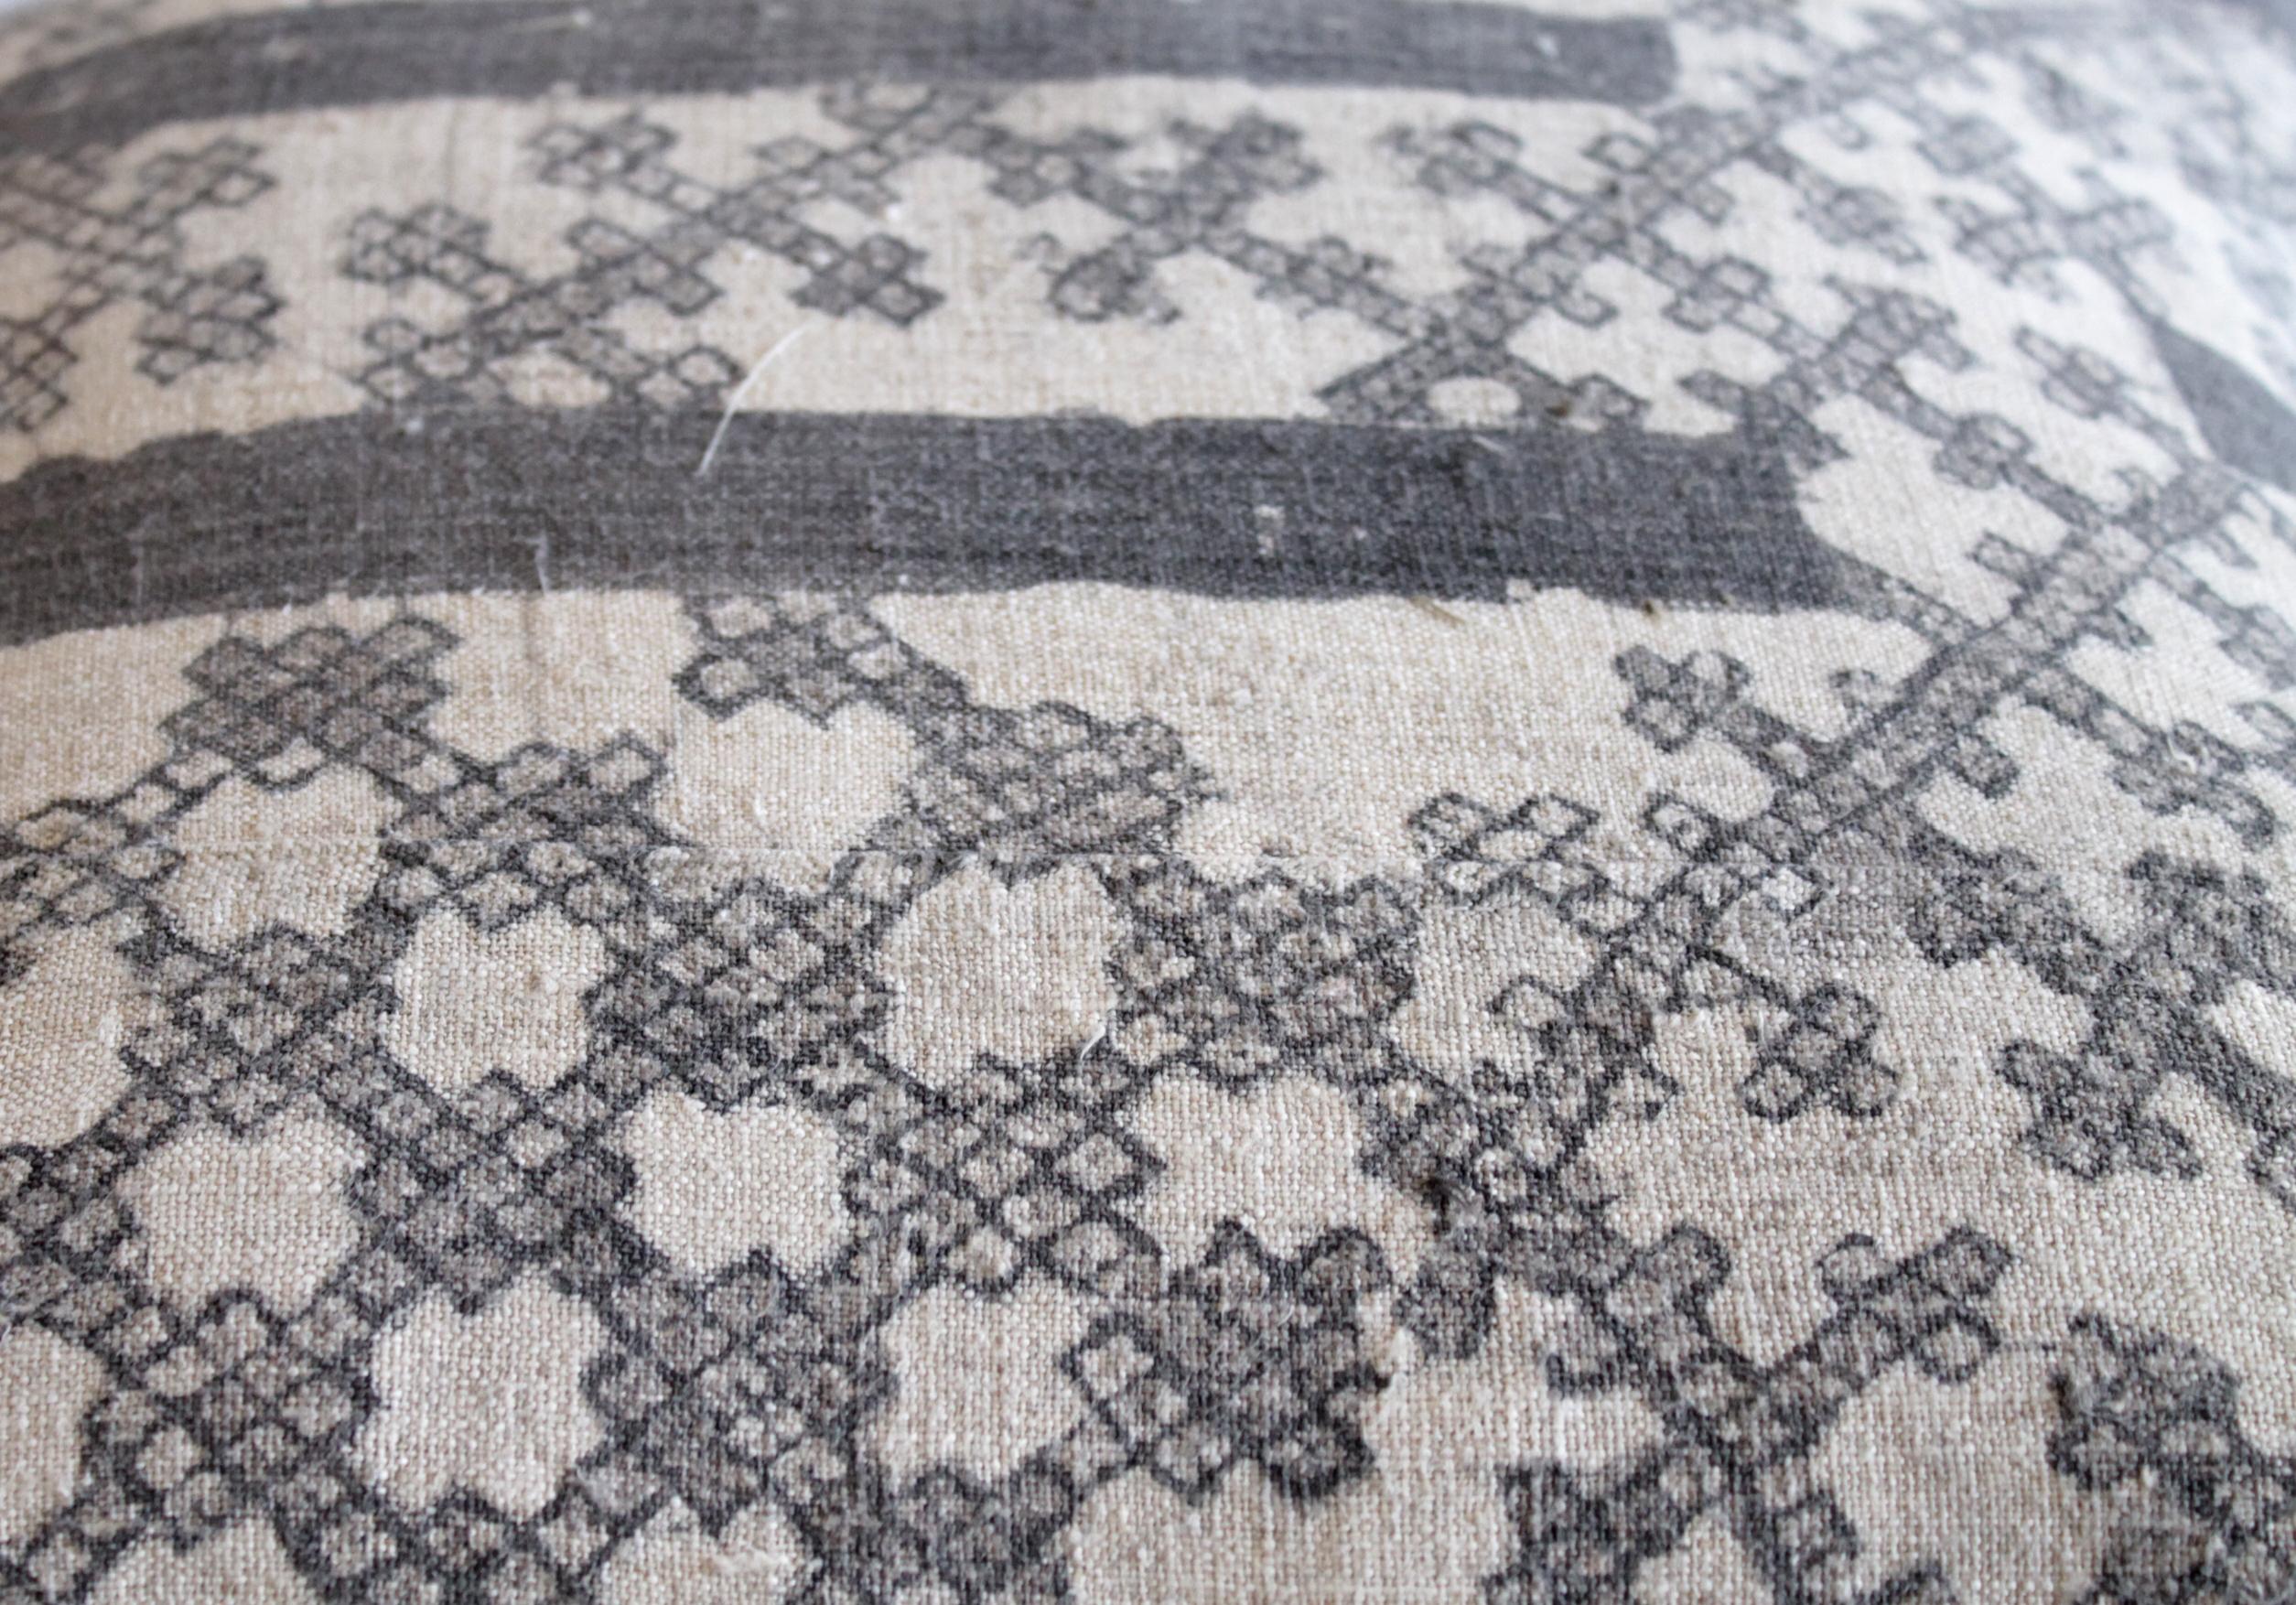 20th Century Vintage Batik Accent Pillow Charcoal and Natural Linen